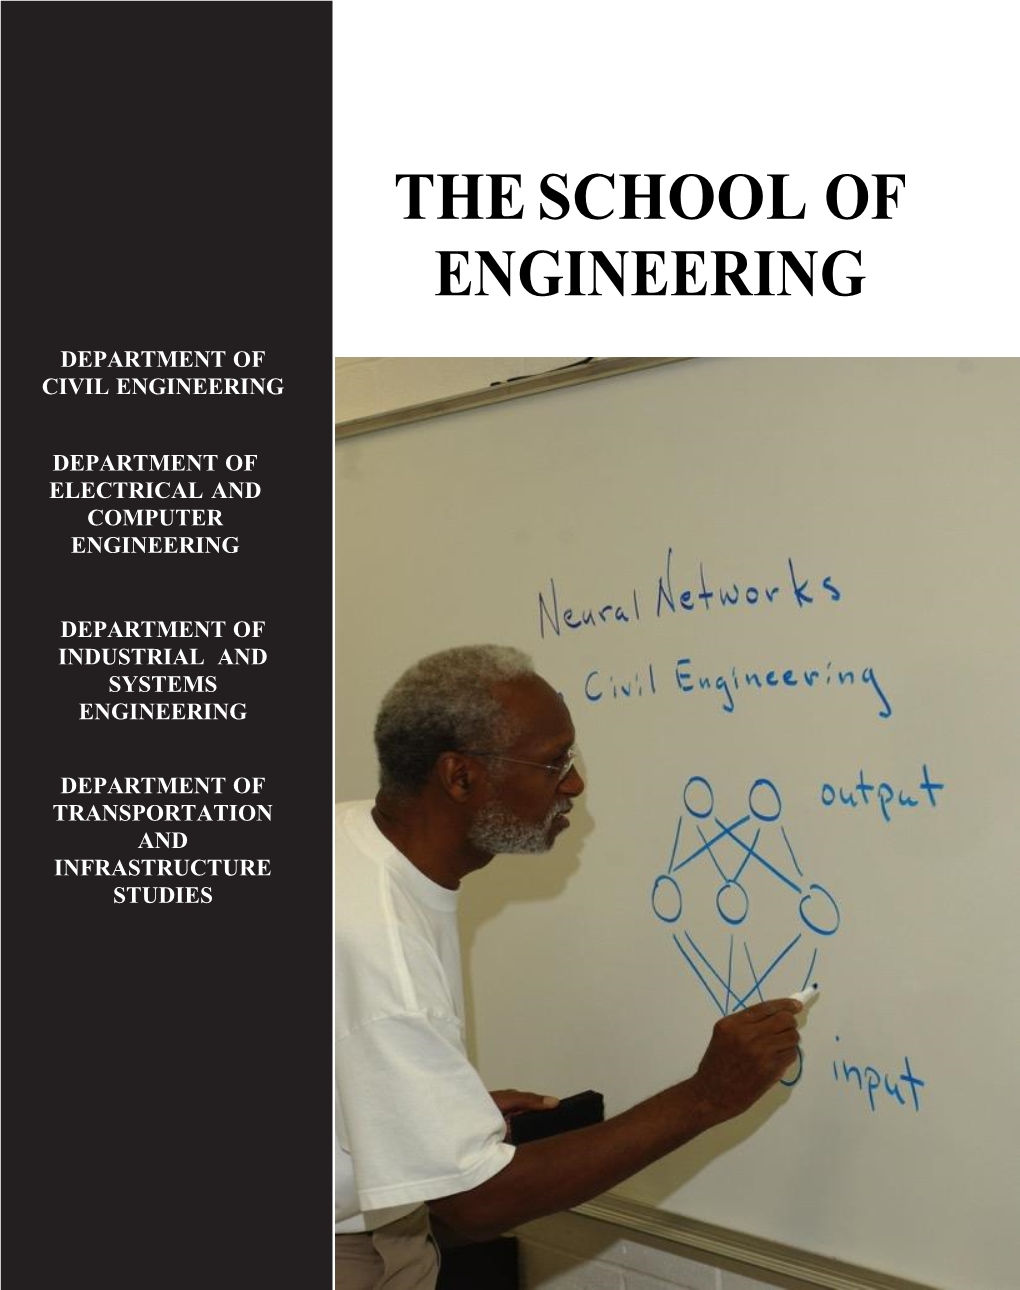 The School of Engineering